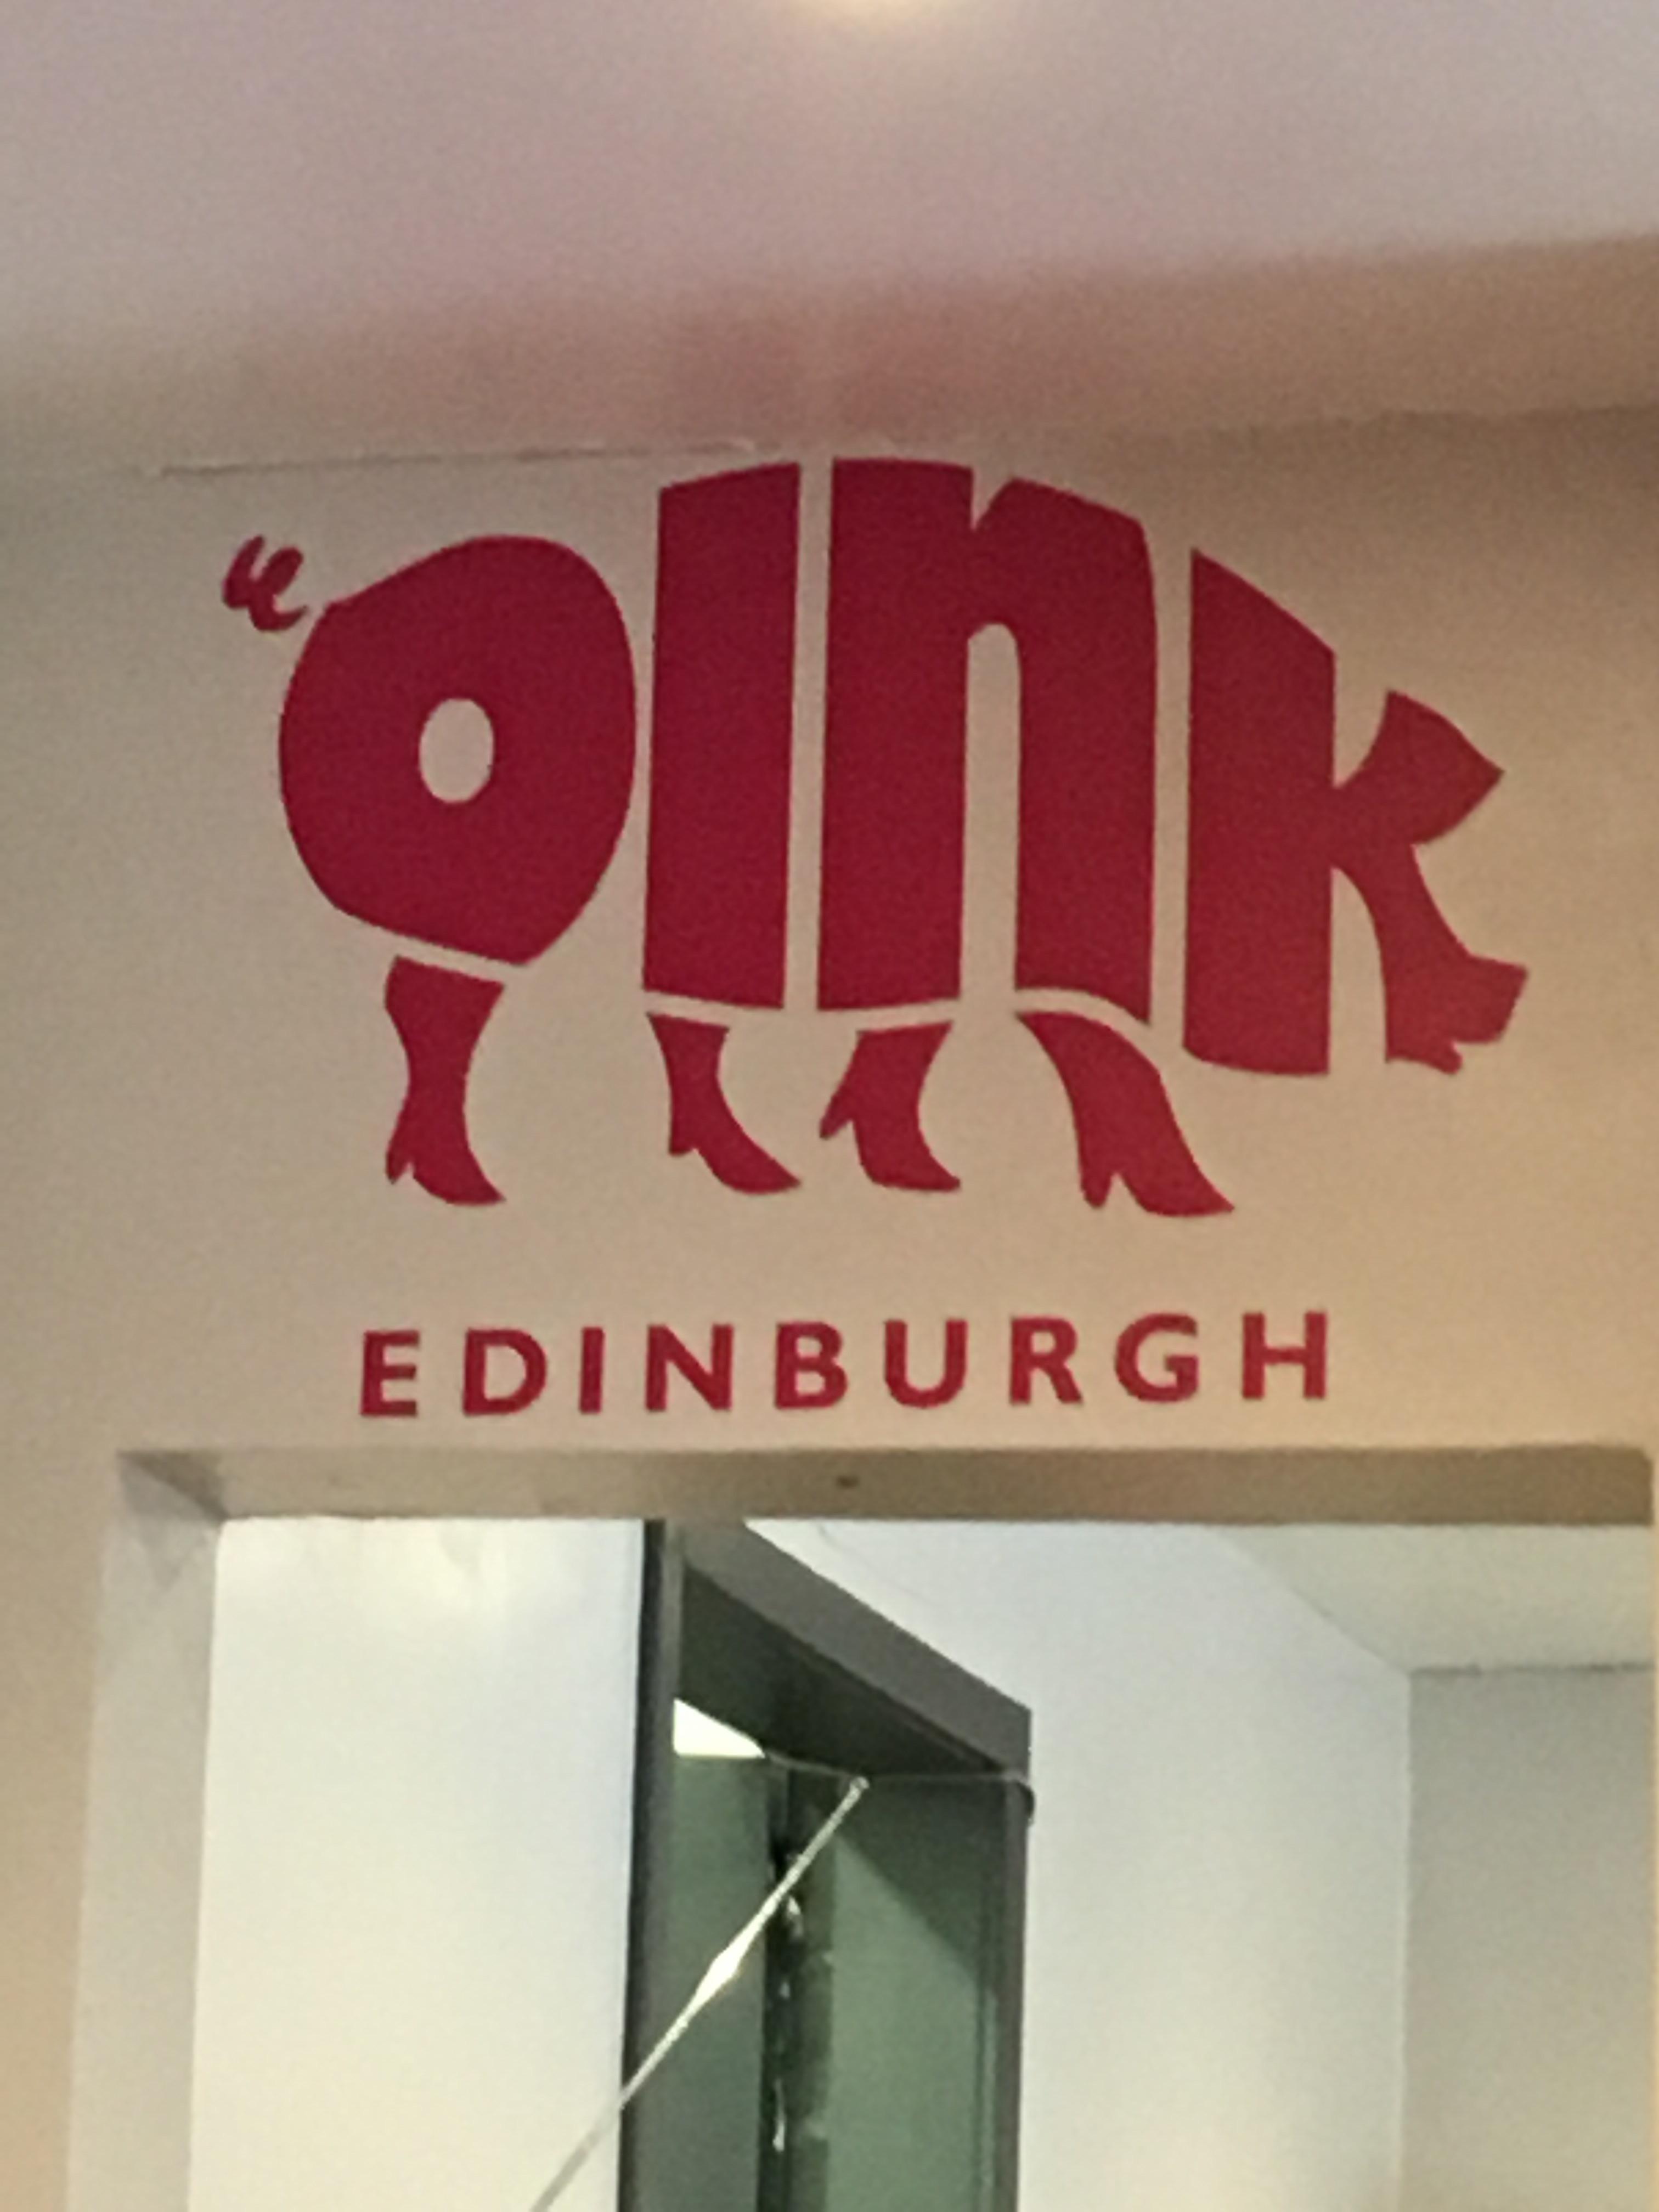 Pork Logo - This logo for a pulled pork shop in Edinburgh, Scotland